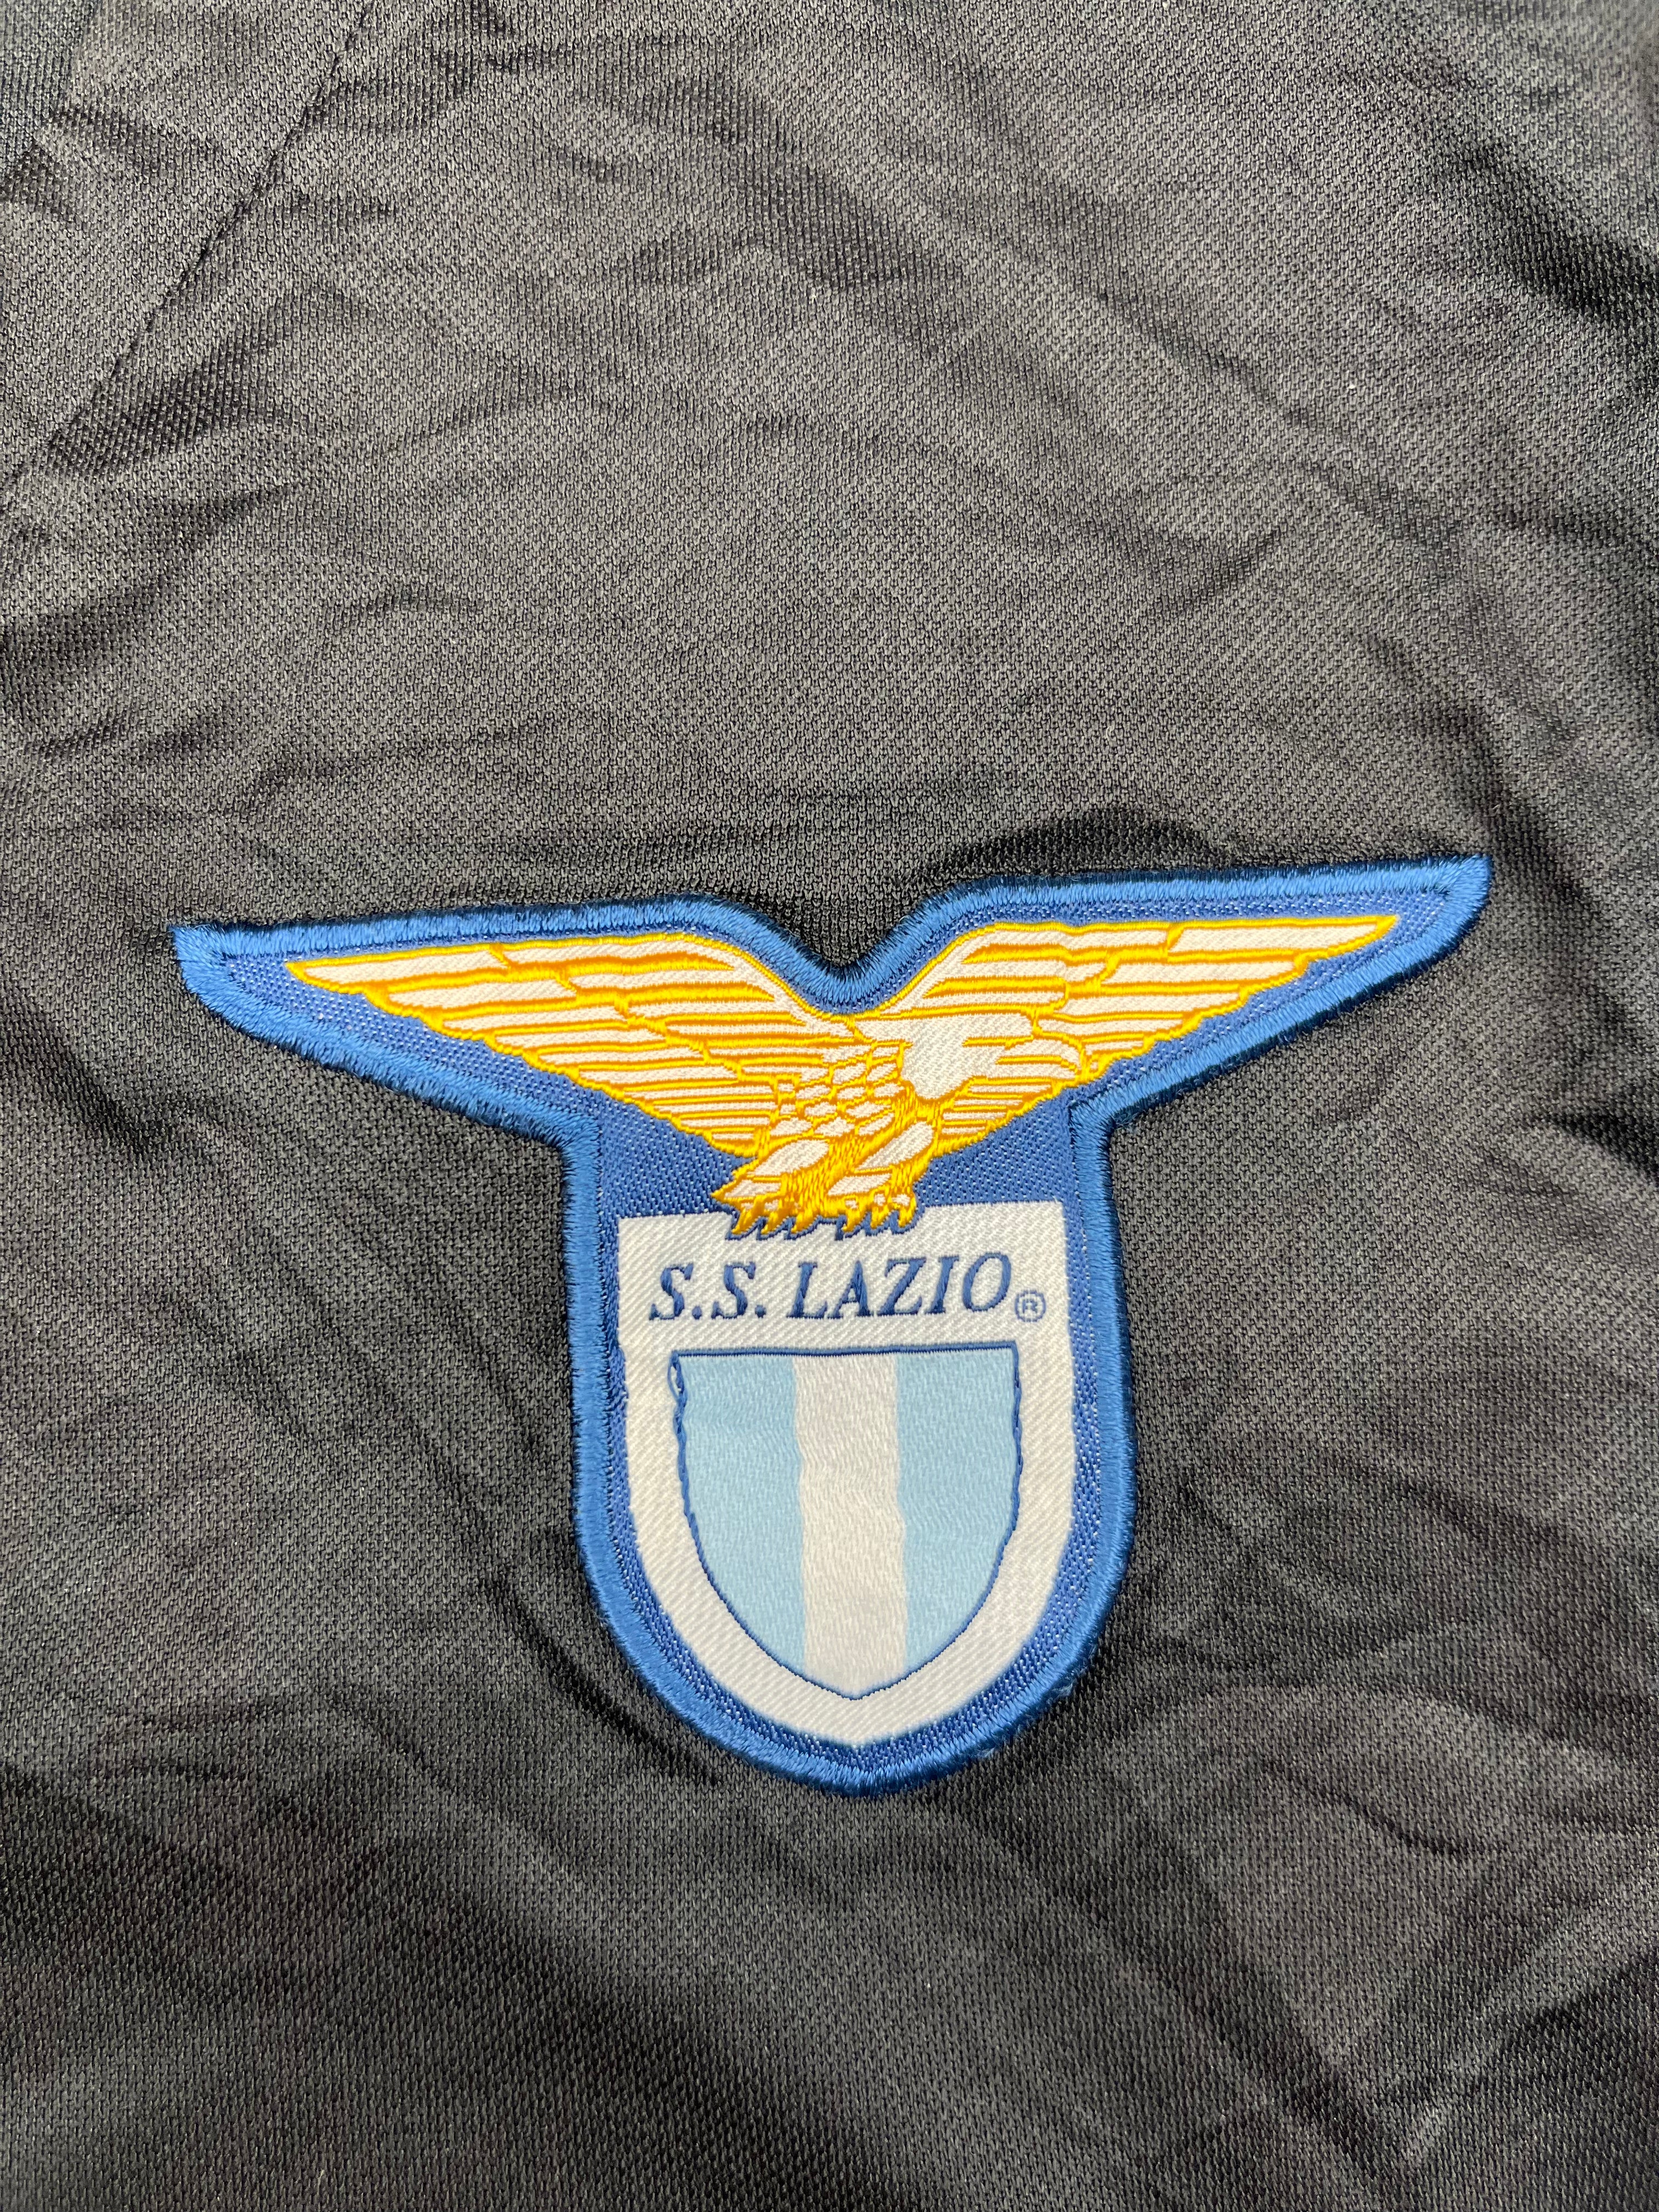 2004/05 Tercera camiseta de Lazio (XL) 8.5/10 